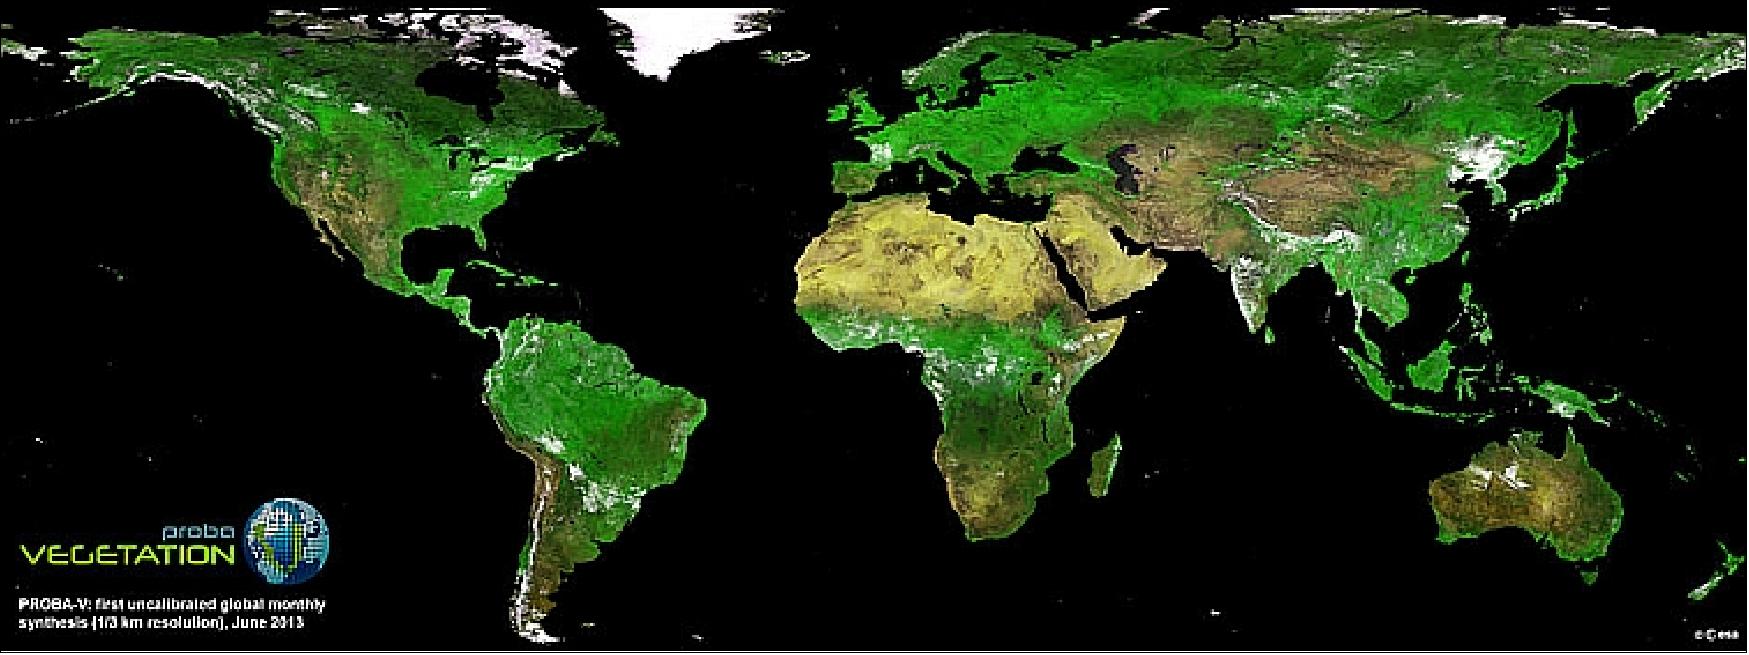 Figure 65: First uncalibrated global mosaic of vegetation from PROBA-V, June 2013 (image credit: ESA)